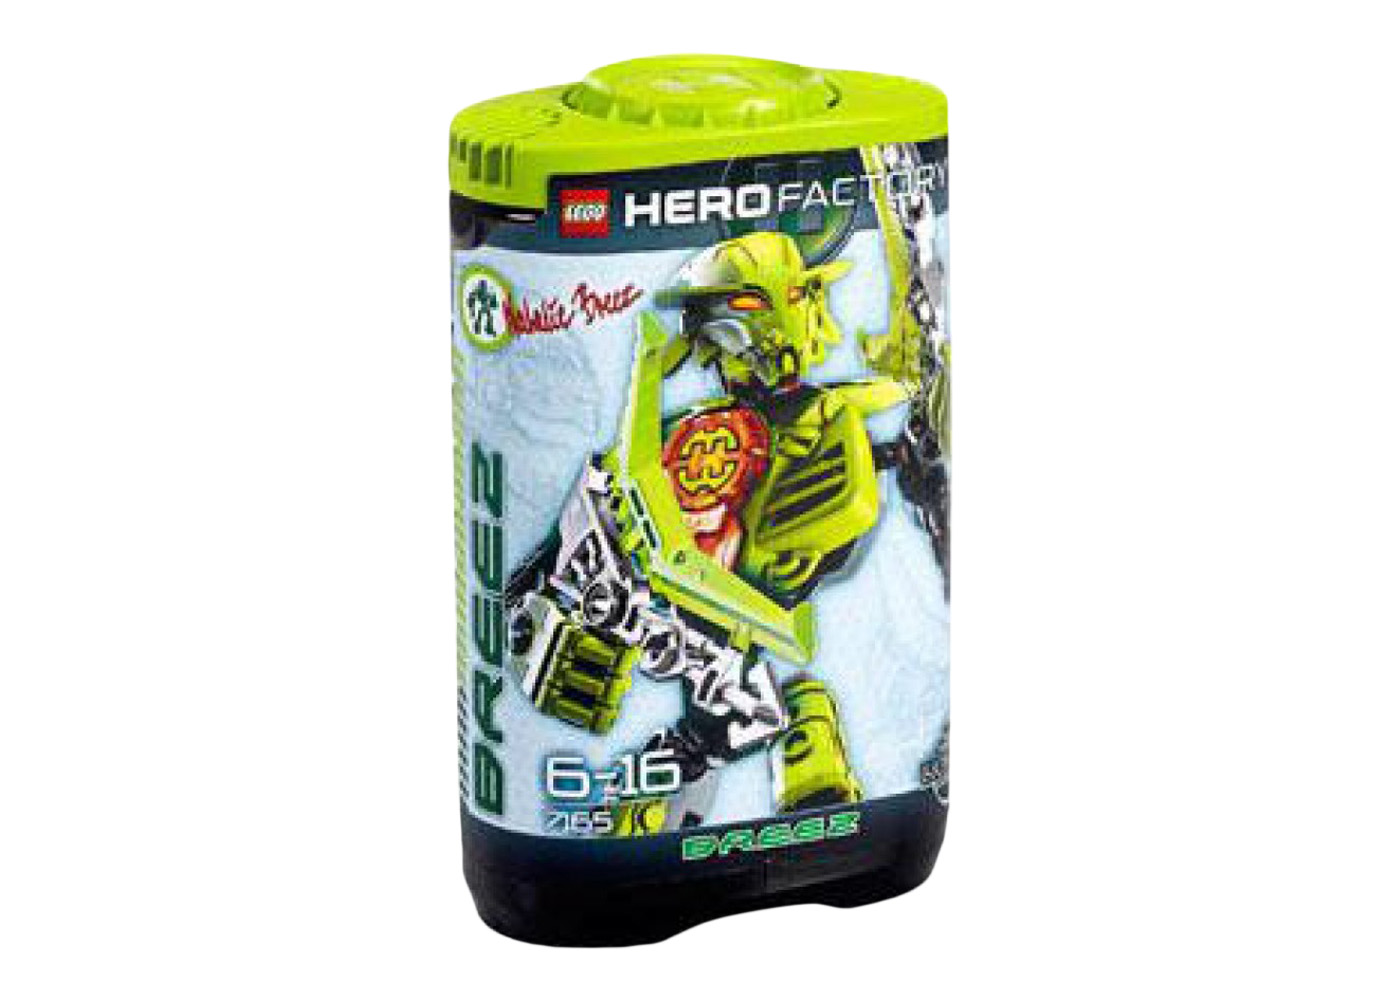 LEGO Hero Factory Breez 2.0 Set 2142 - US